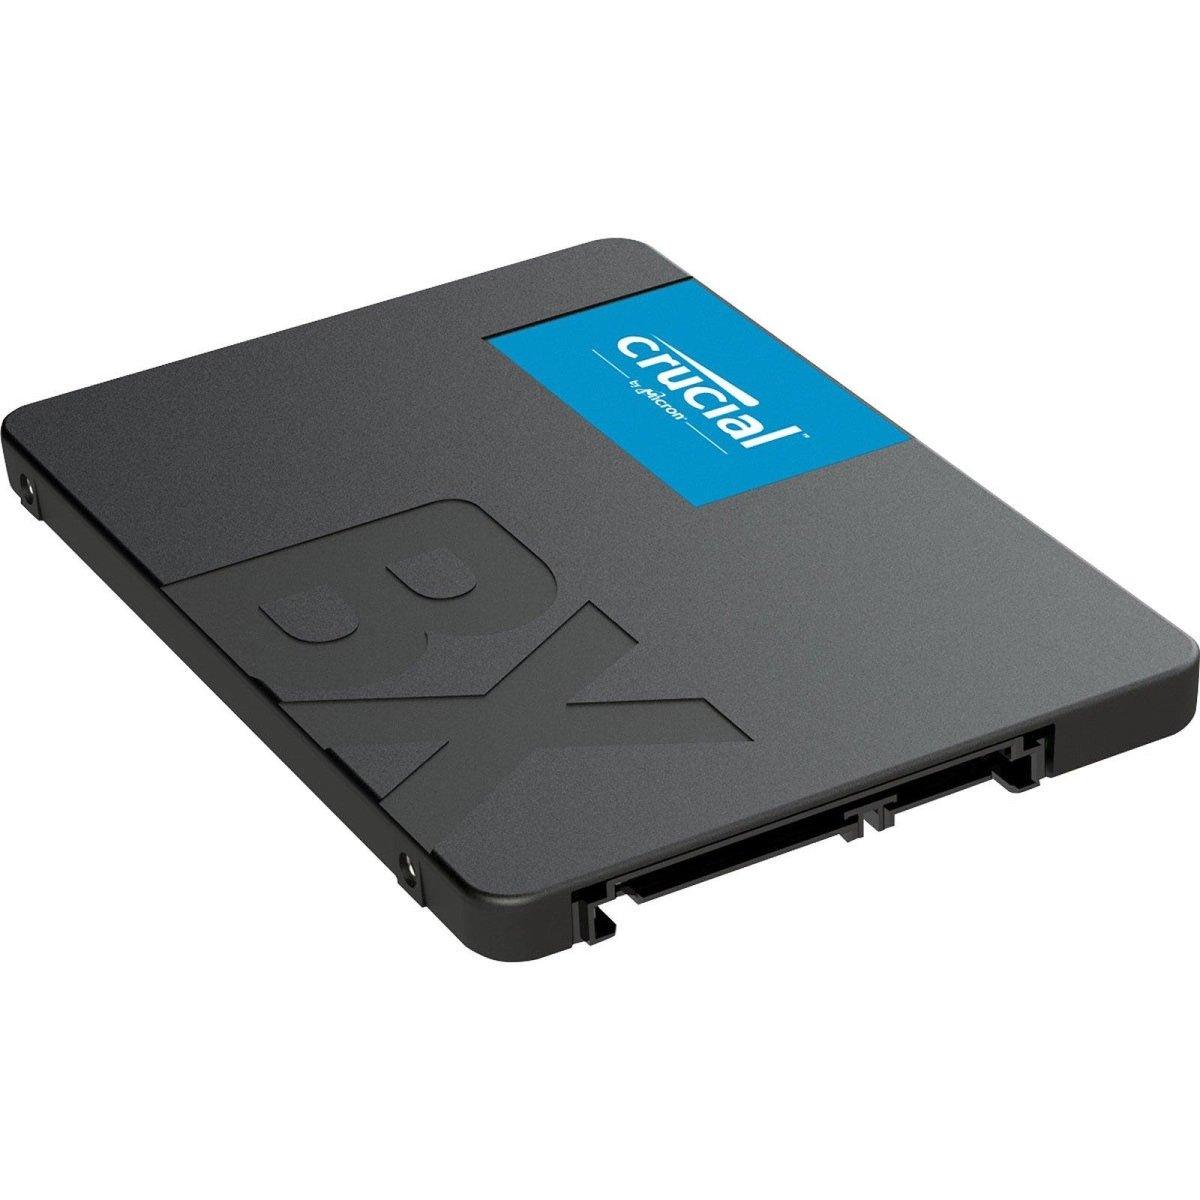 Disque Dur SSD Crucial BX500 240 Go Maroc Prix pas cher - smartmarket.ma